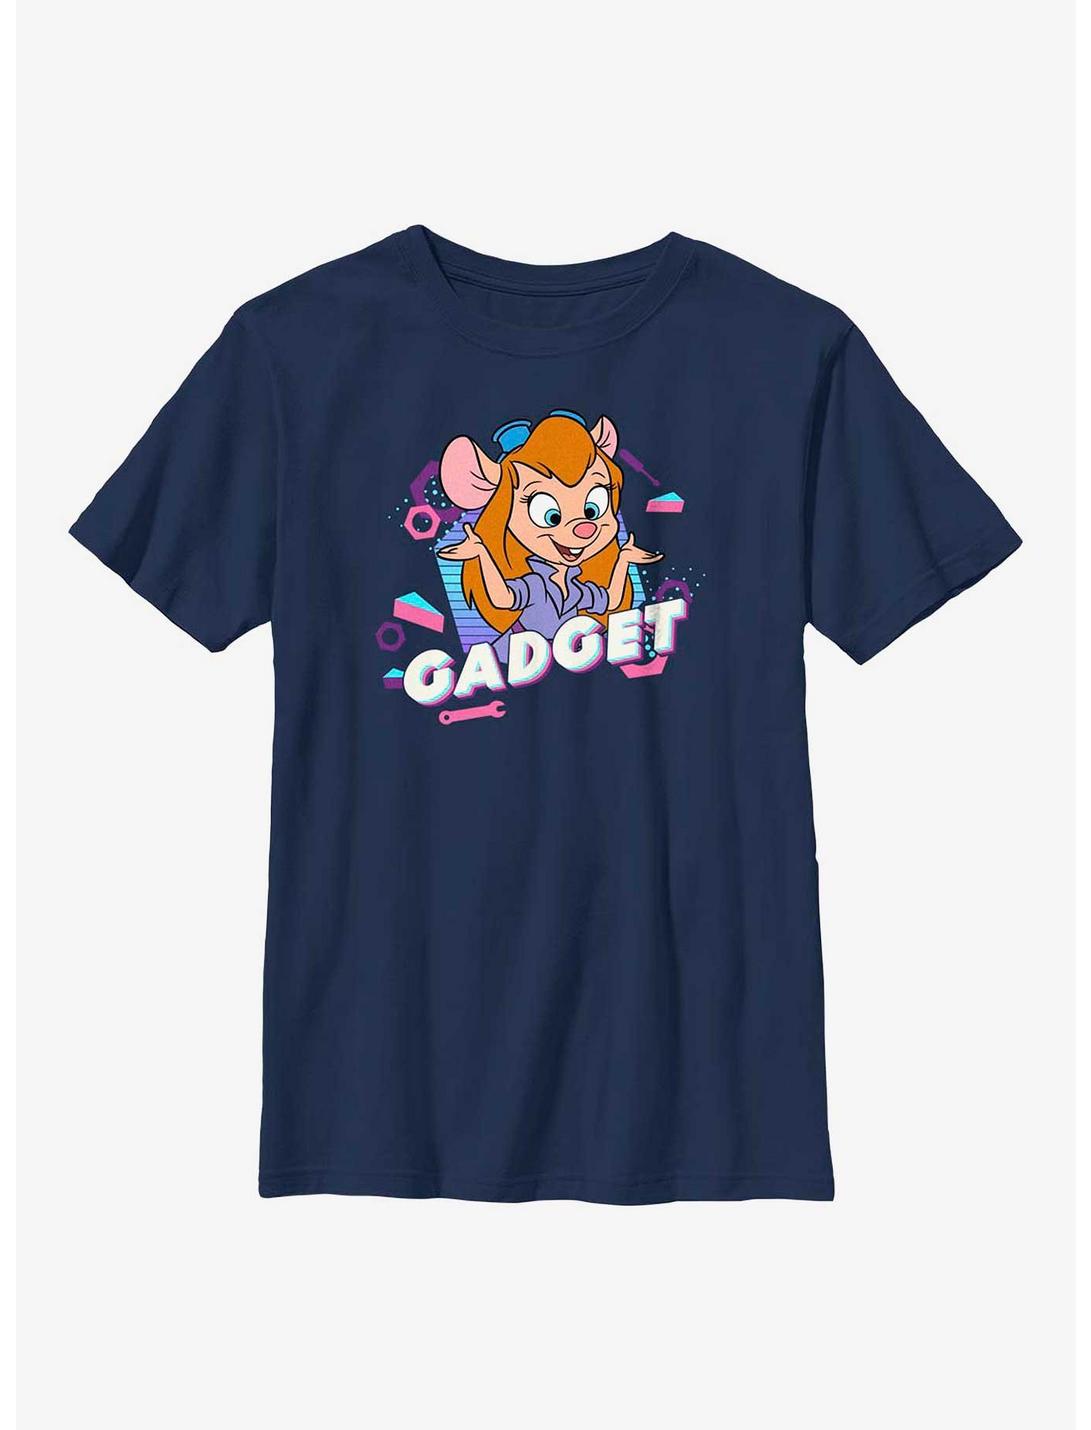 Disney Chip 'n Dale Gadget Youth T-Shirt, NAVY, hi-res